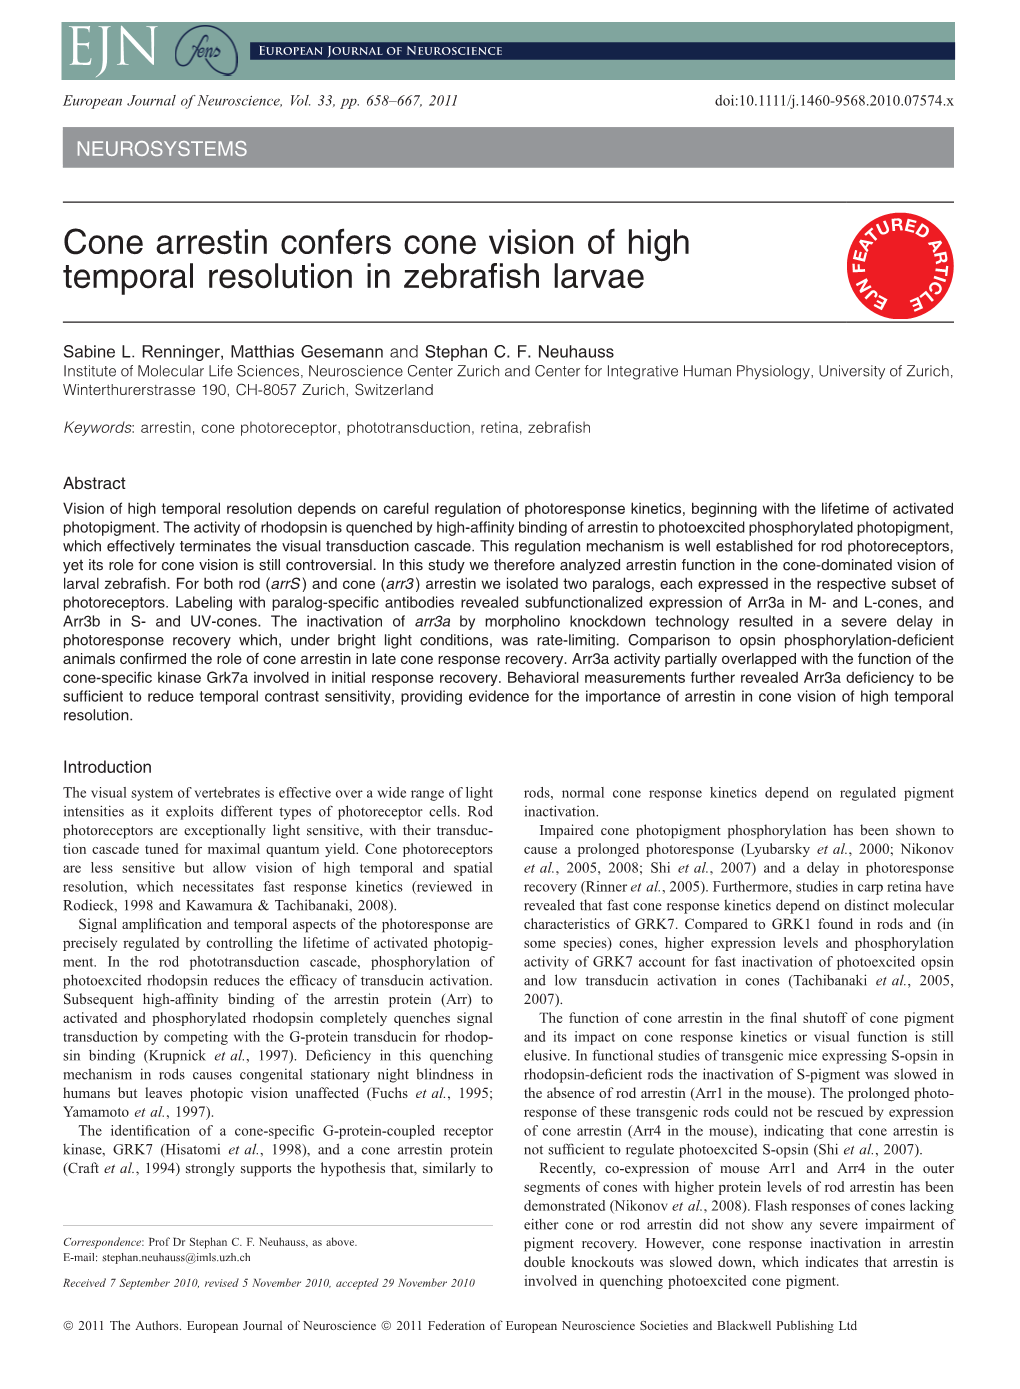 Cone Arrestin Confers Cone Vision of High Temporal Resolution in Zebraﬁsh Larvae